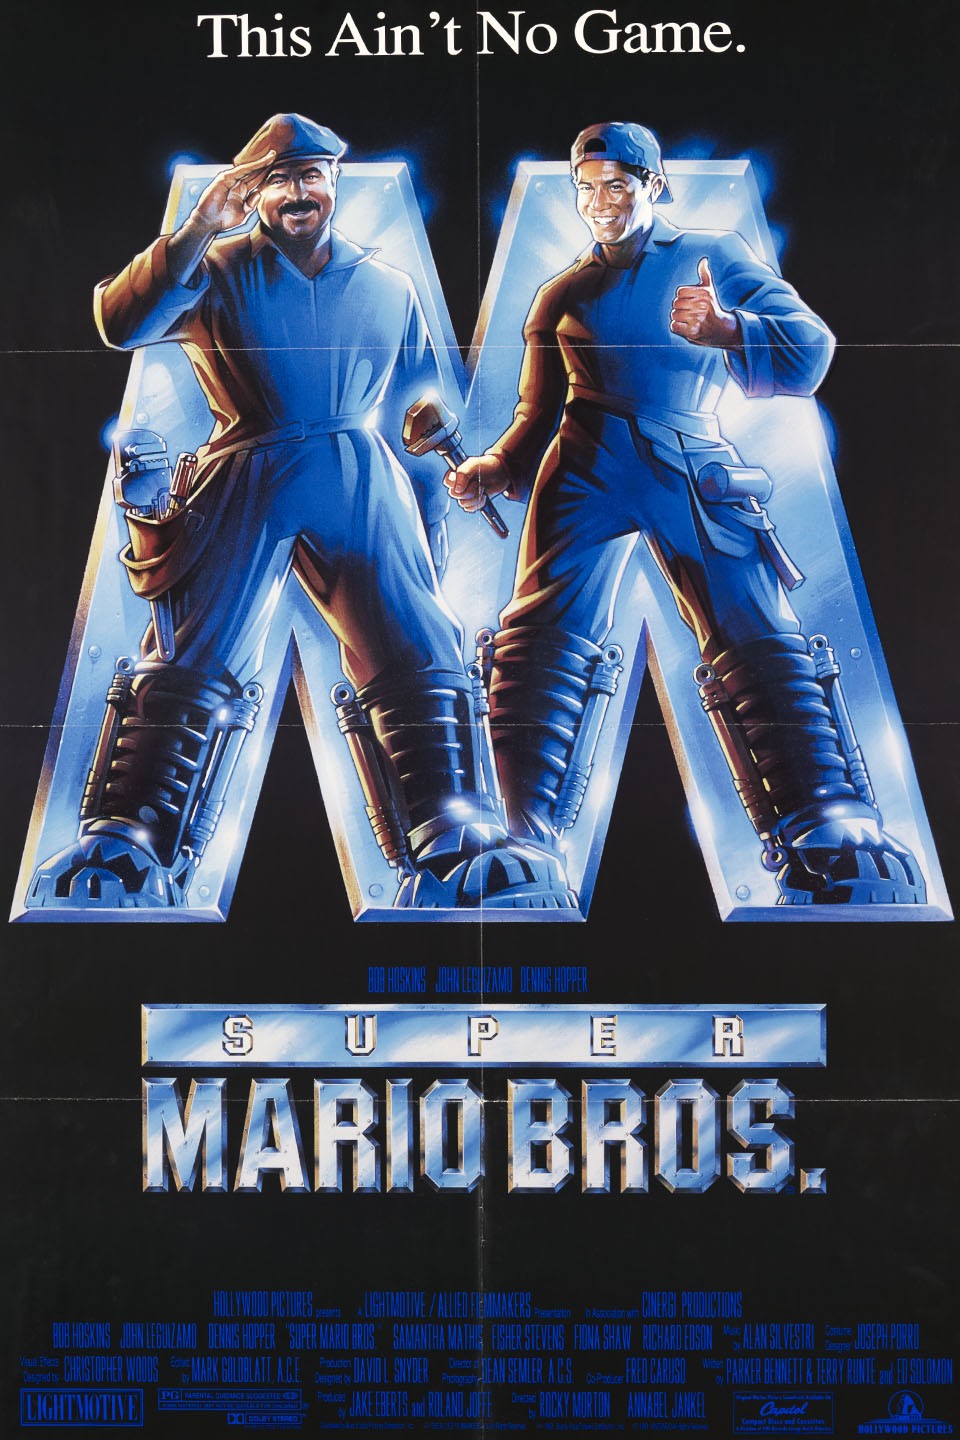 Super Smash Bros. (Video Game 1999) - IMDb